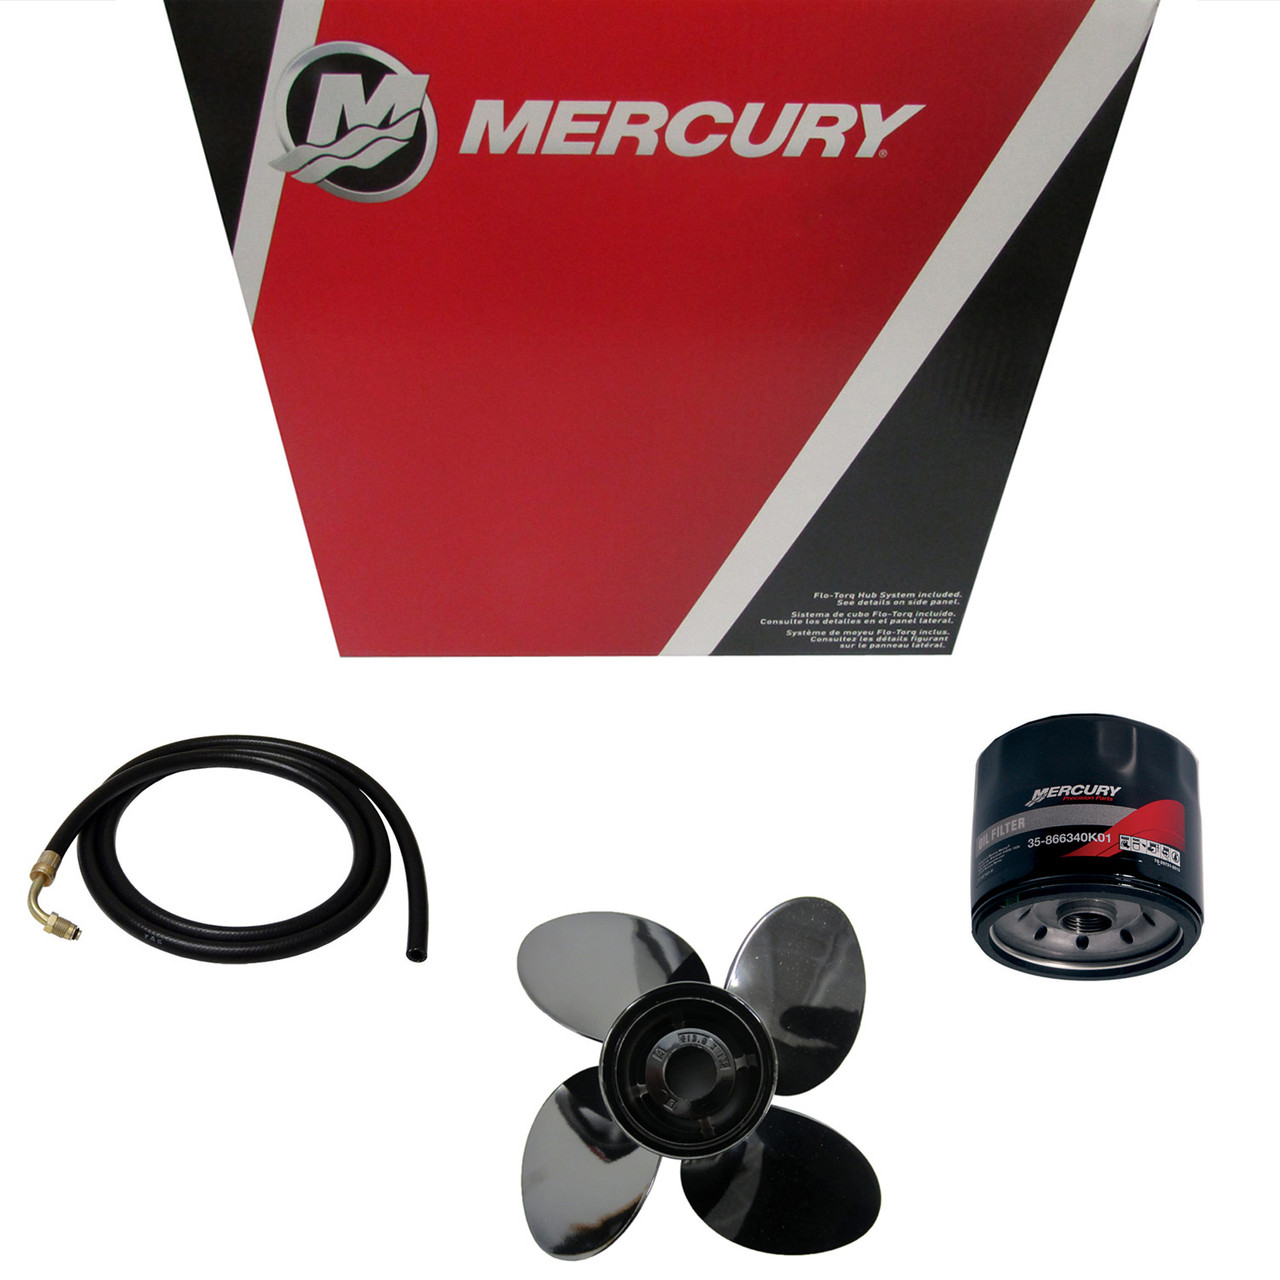 Mercury Marine / Mercruiser New OEM Oil-Diesel 3, 92-858042Q01